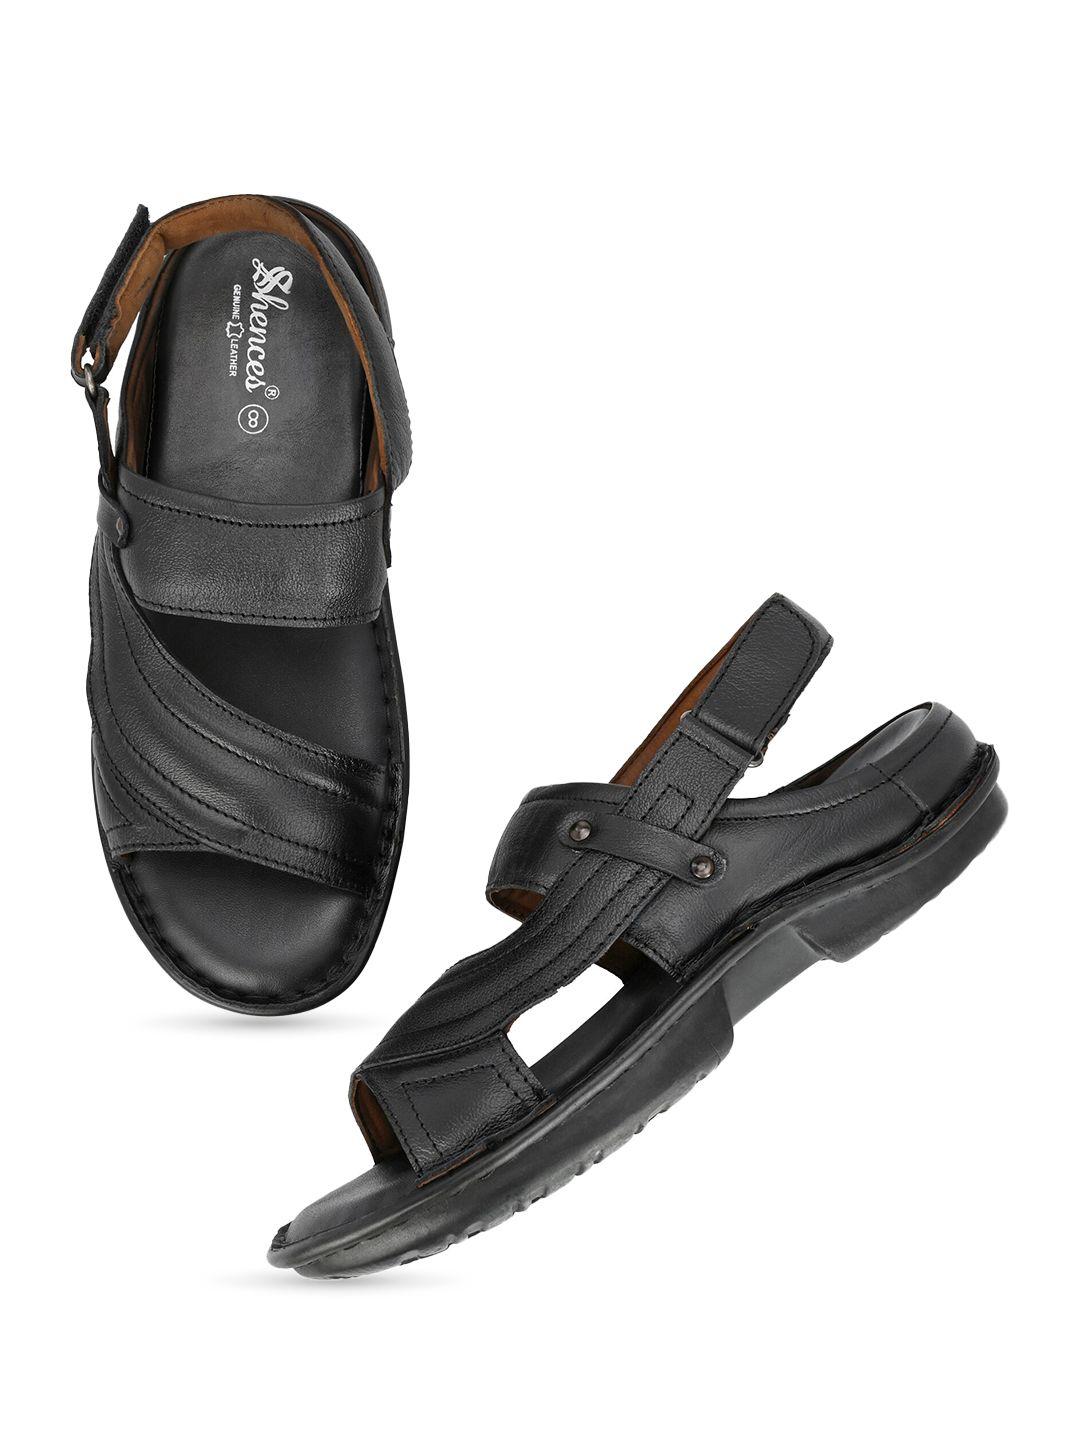 shences-men-leather-comfort-sandals